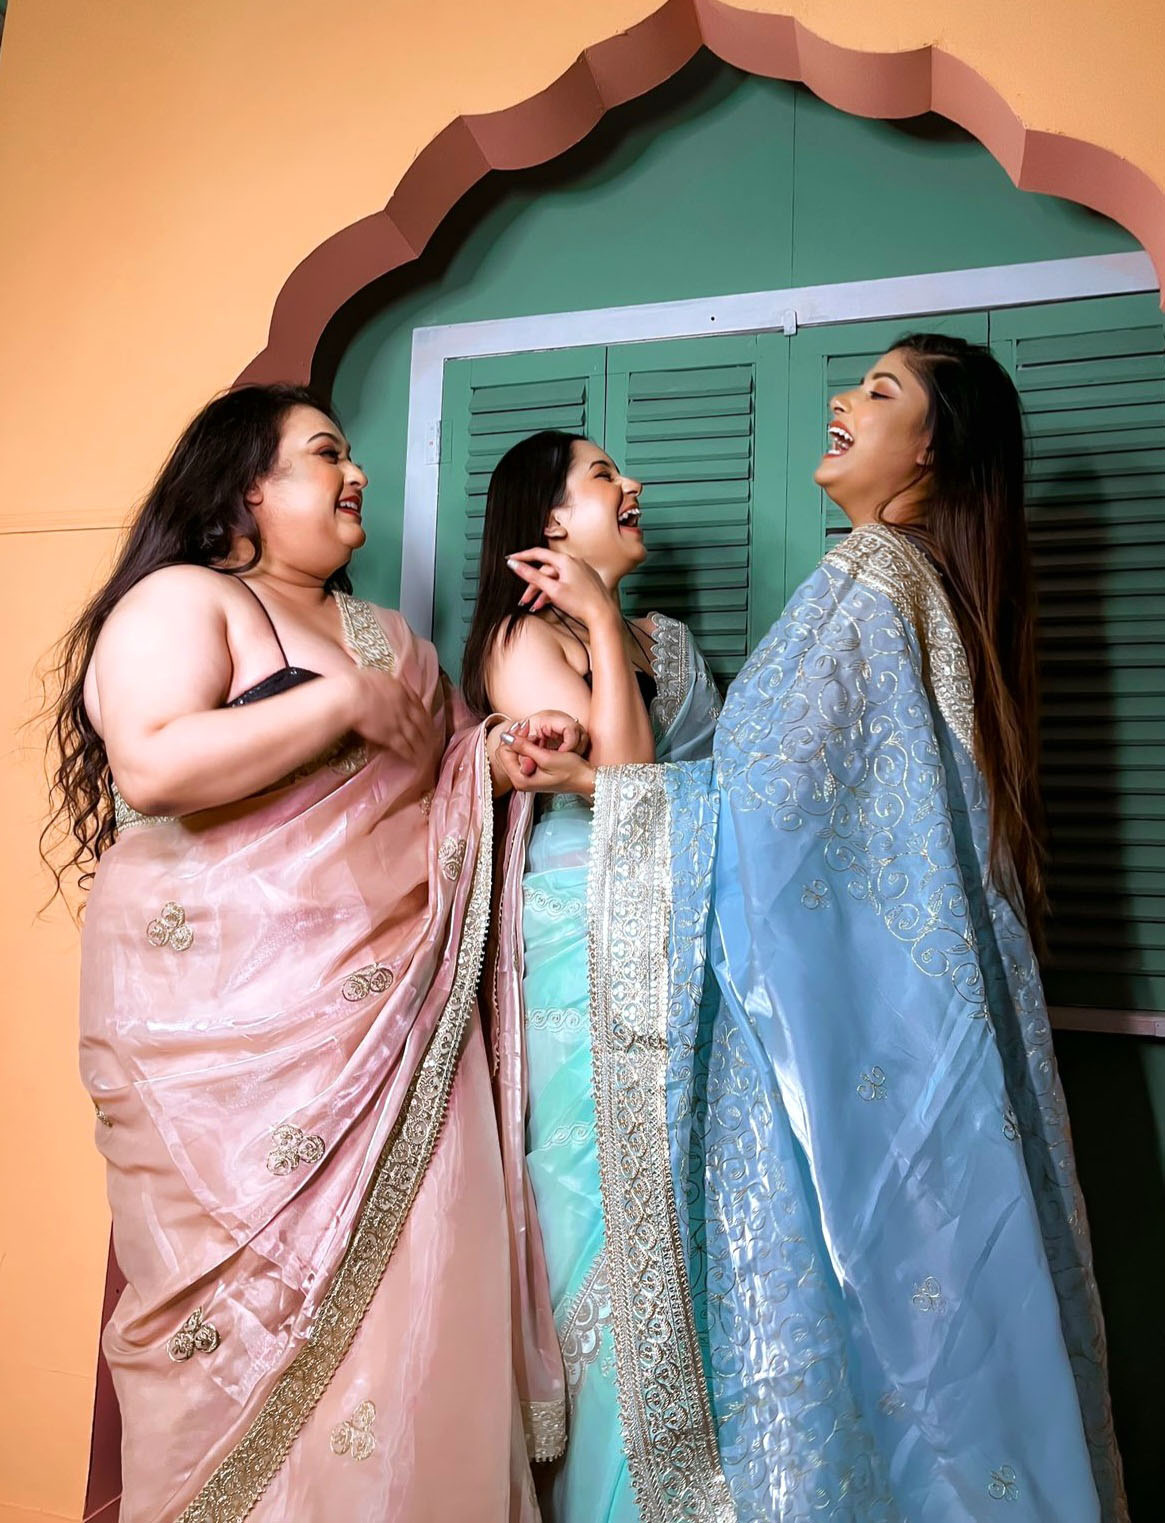 South Indian Bridesmaid Photoshoot Poses Ideas -Storyvogue.com | Sisters  photoshoot poses, Indian wedding photography poses, Indian bride poses